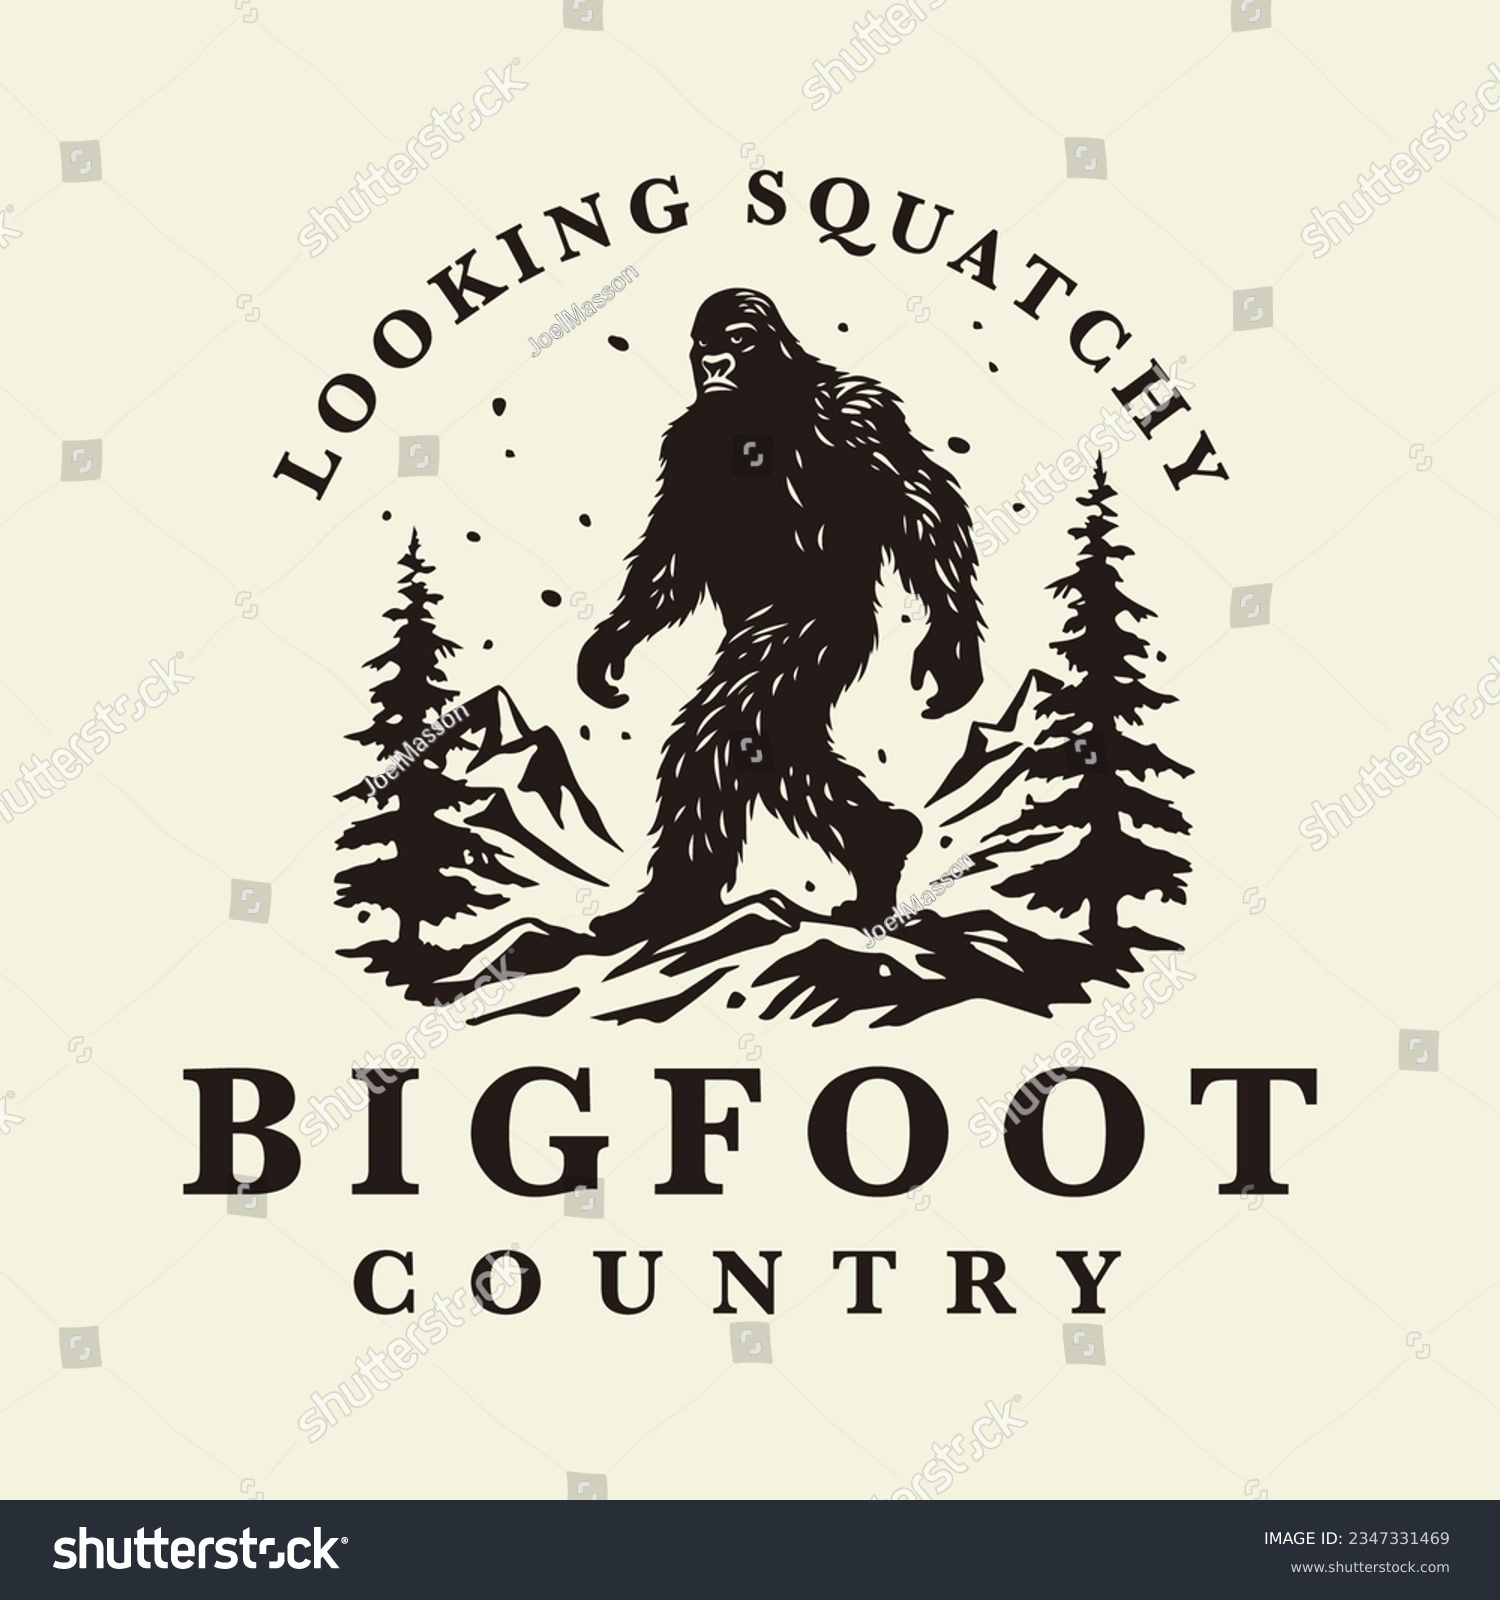 SVG of Bigfoot country logo design. Sasquatch brand icon. Yeti symbol. Looking squatchy emblem. Mythical cryptid creature vector illustration. svg